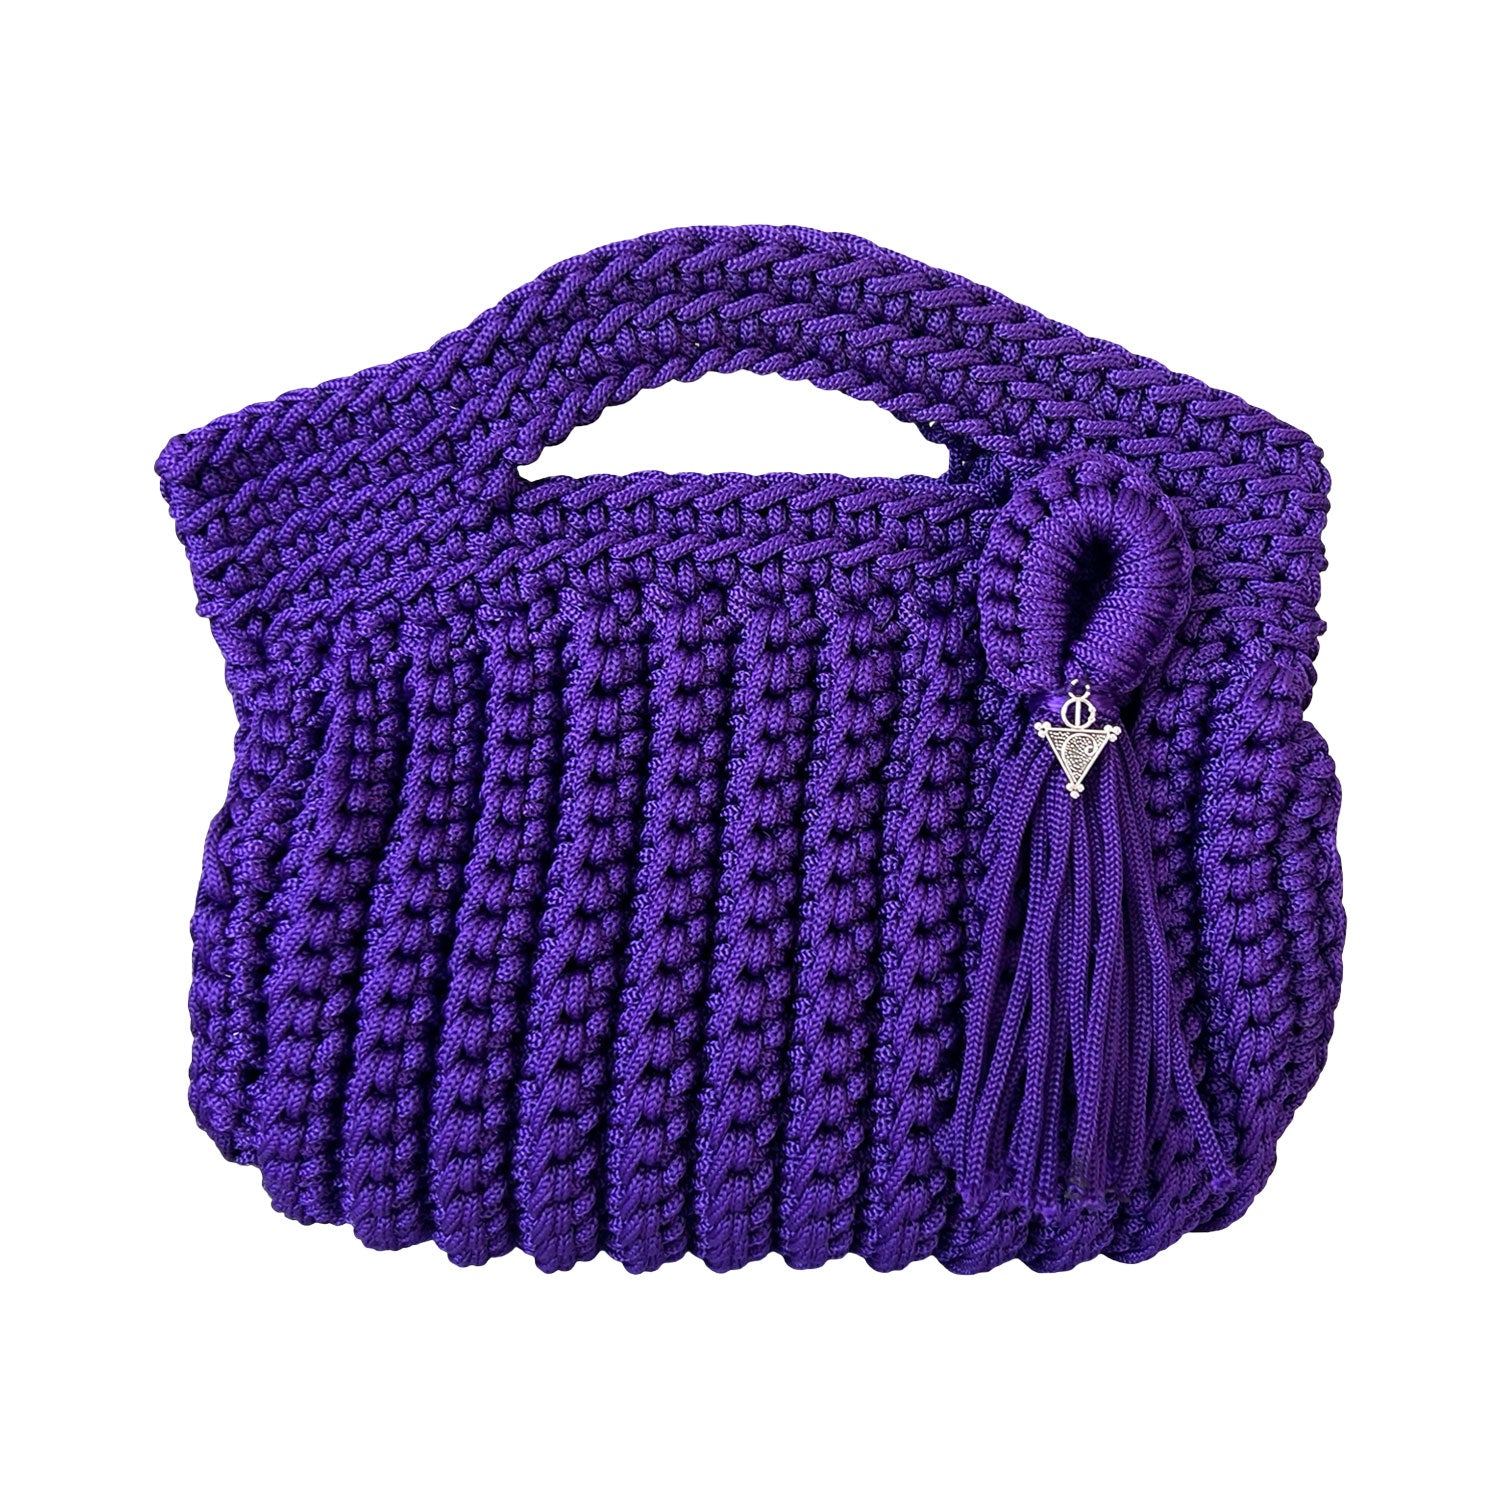 Mini Crochet Handbag in Purple